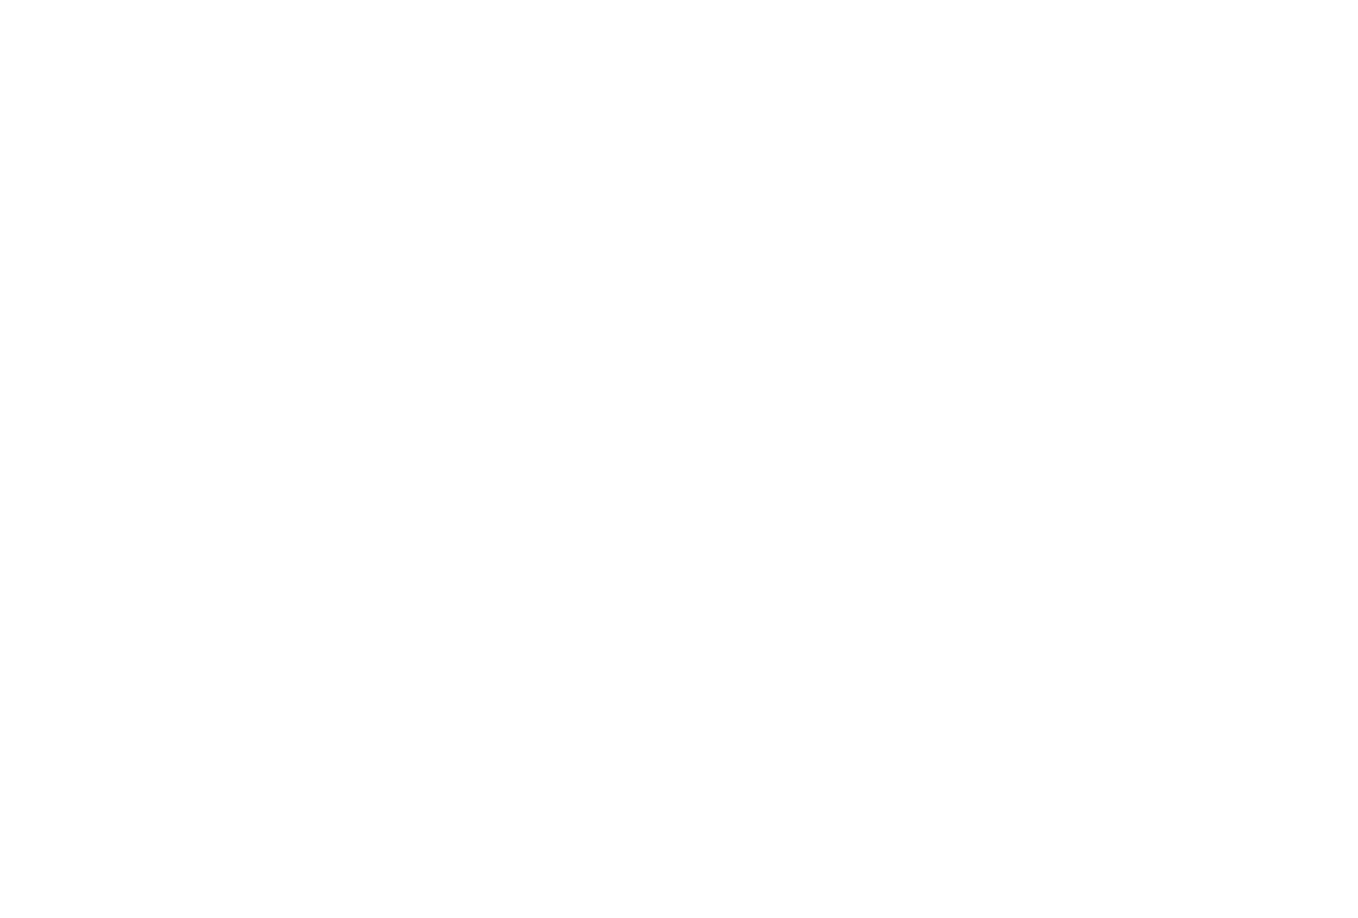 The Sefton Park Palm House logo.